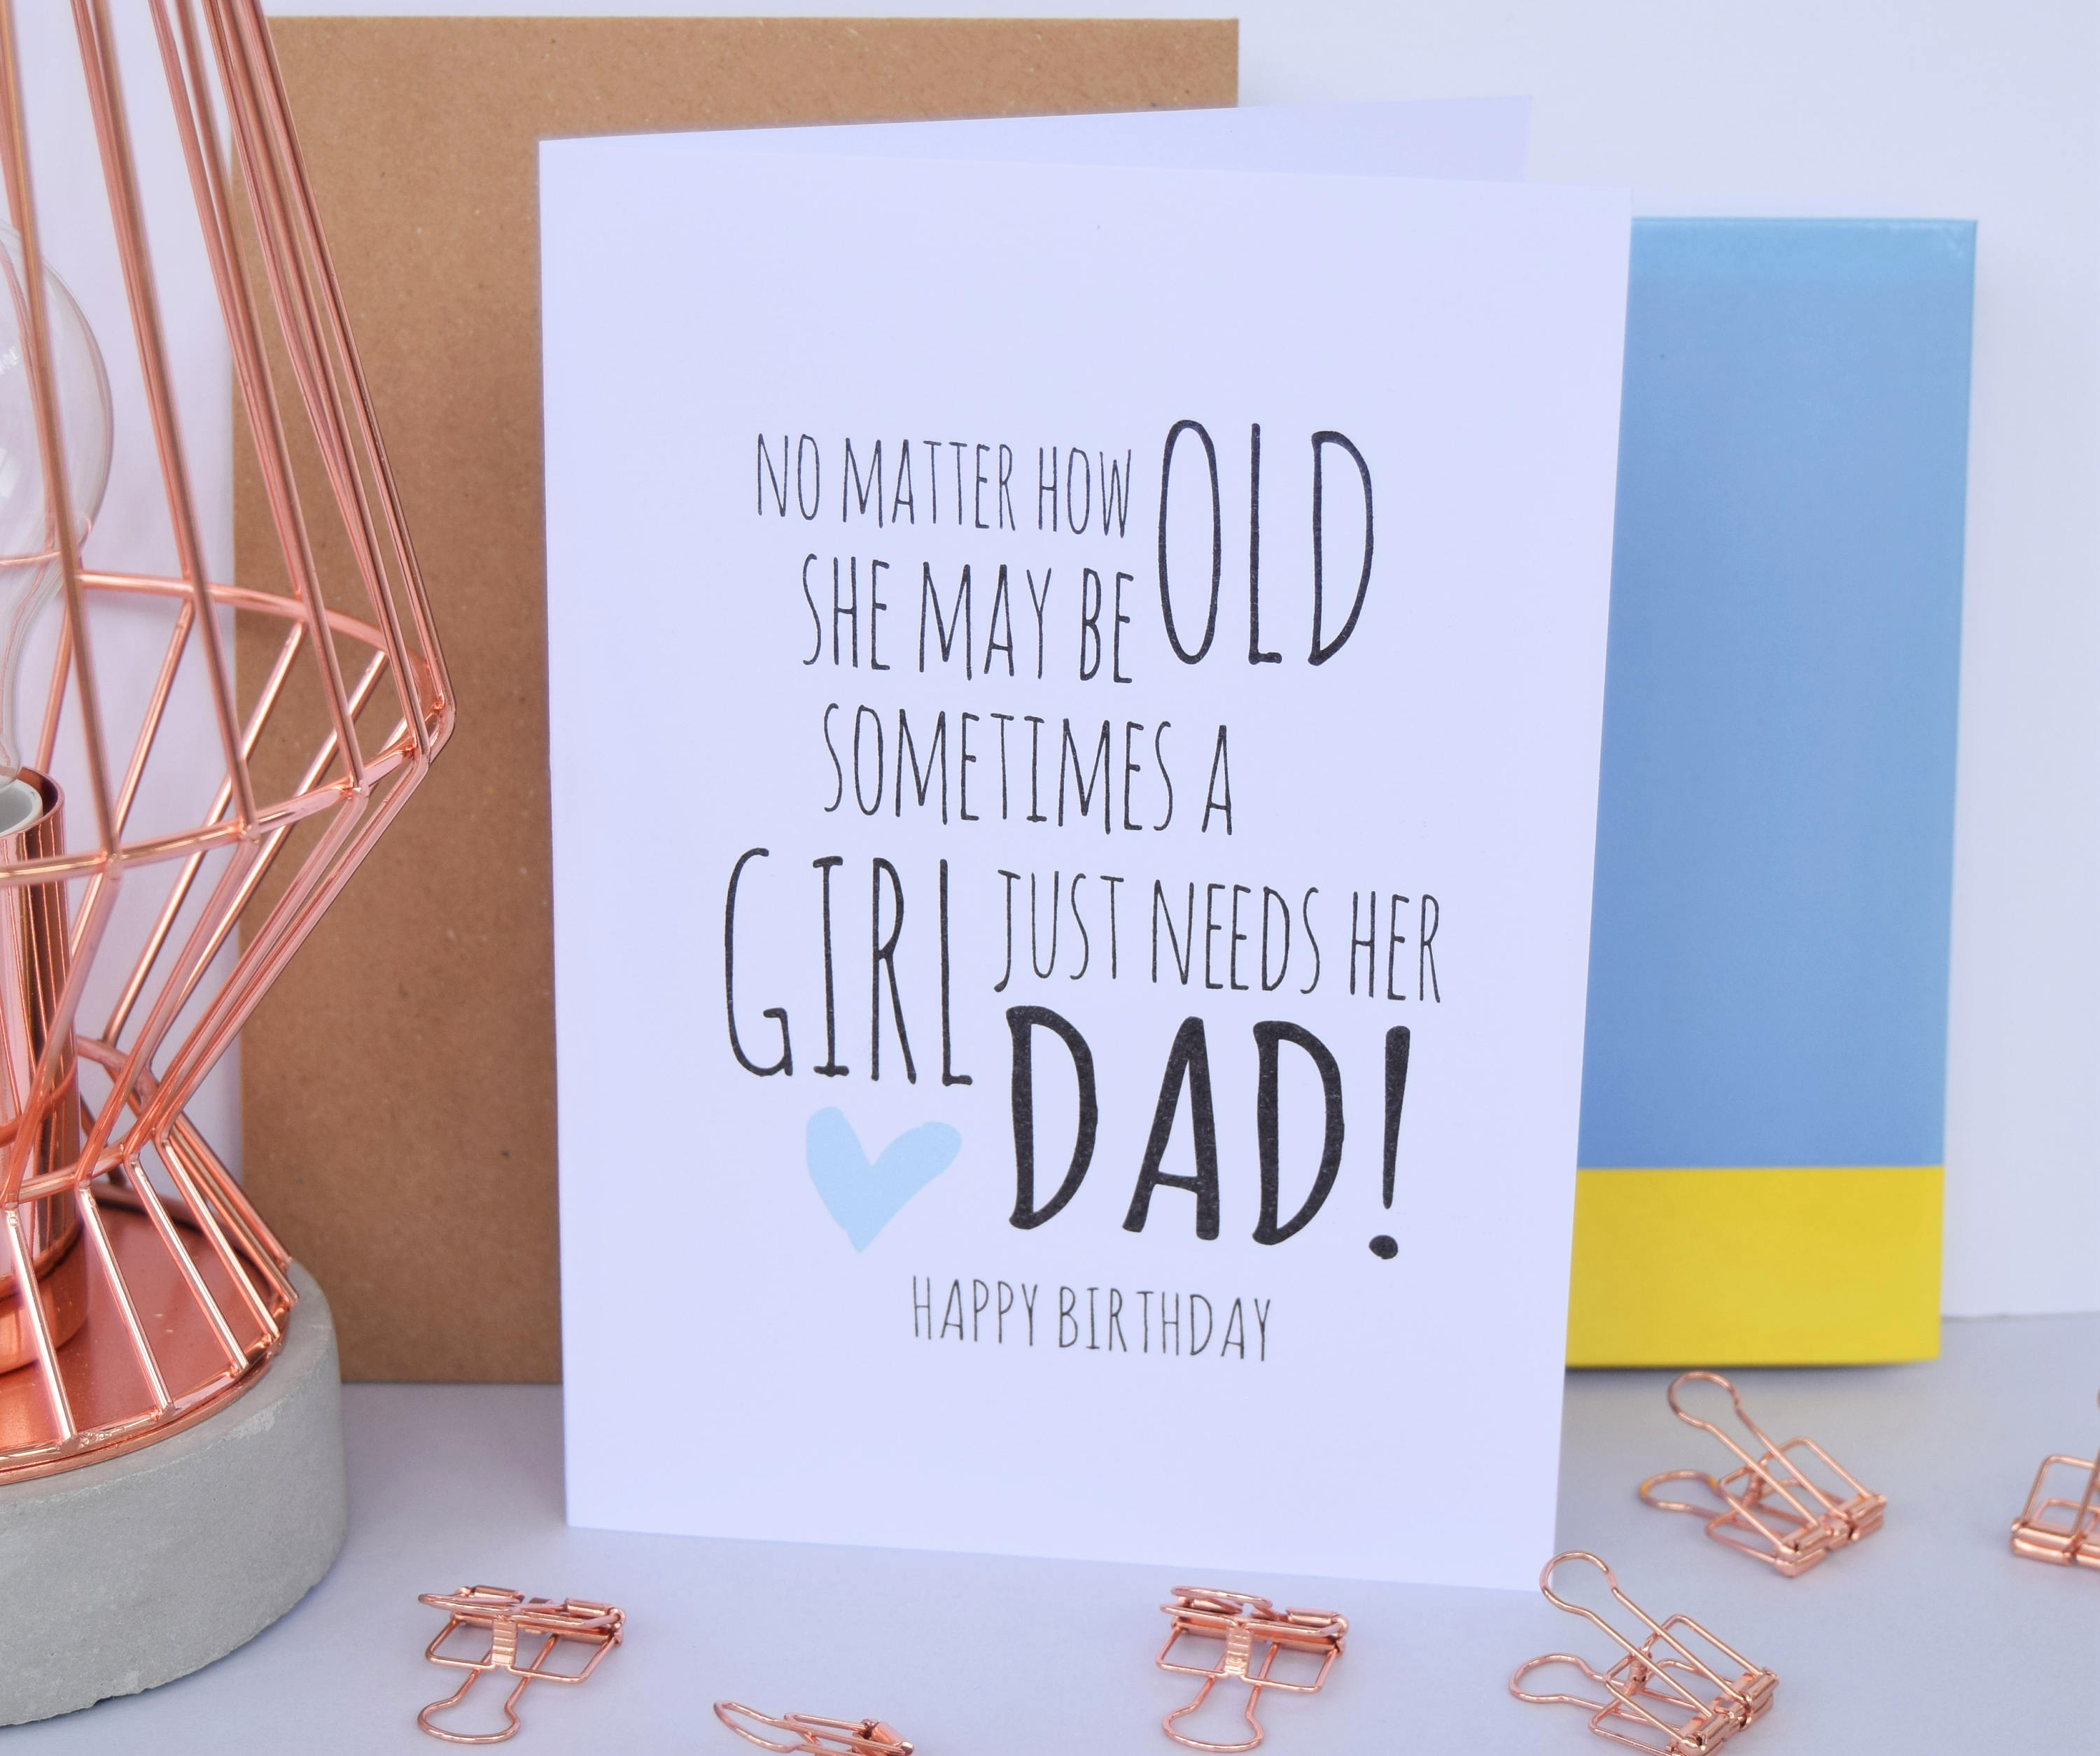 Birthday Cards Ideas For Dad 98 Good Birthday Card Ideas For Dad Good Birthday Cards For Dad